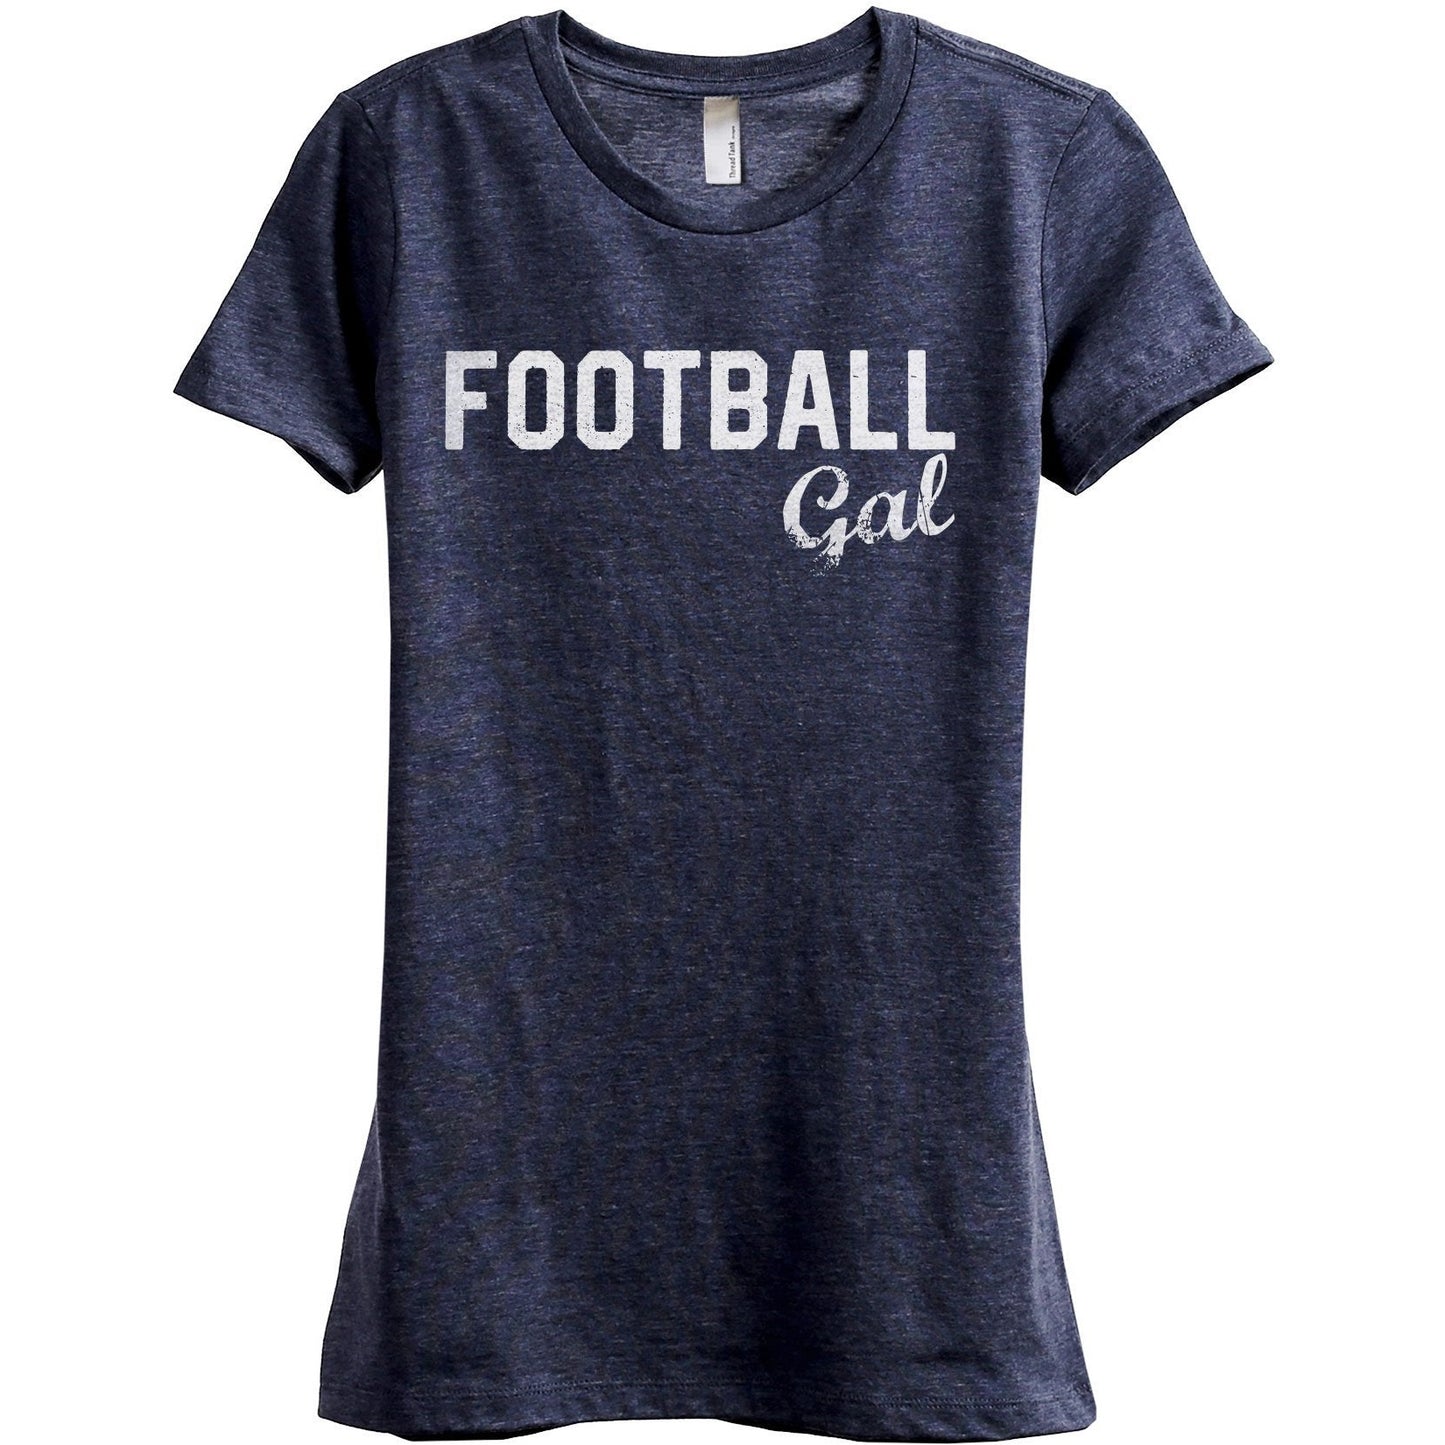 Football Gal Women's Relaxed Crewneck T-Shirt Top Tee Heather Navy Grey
